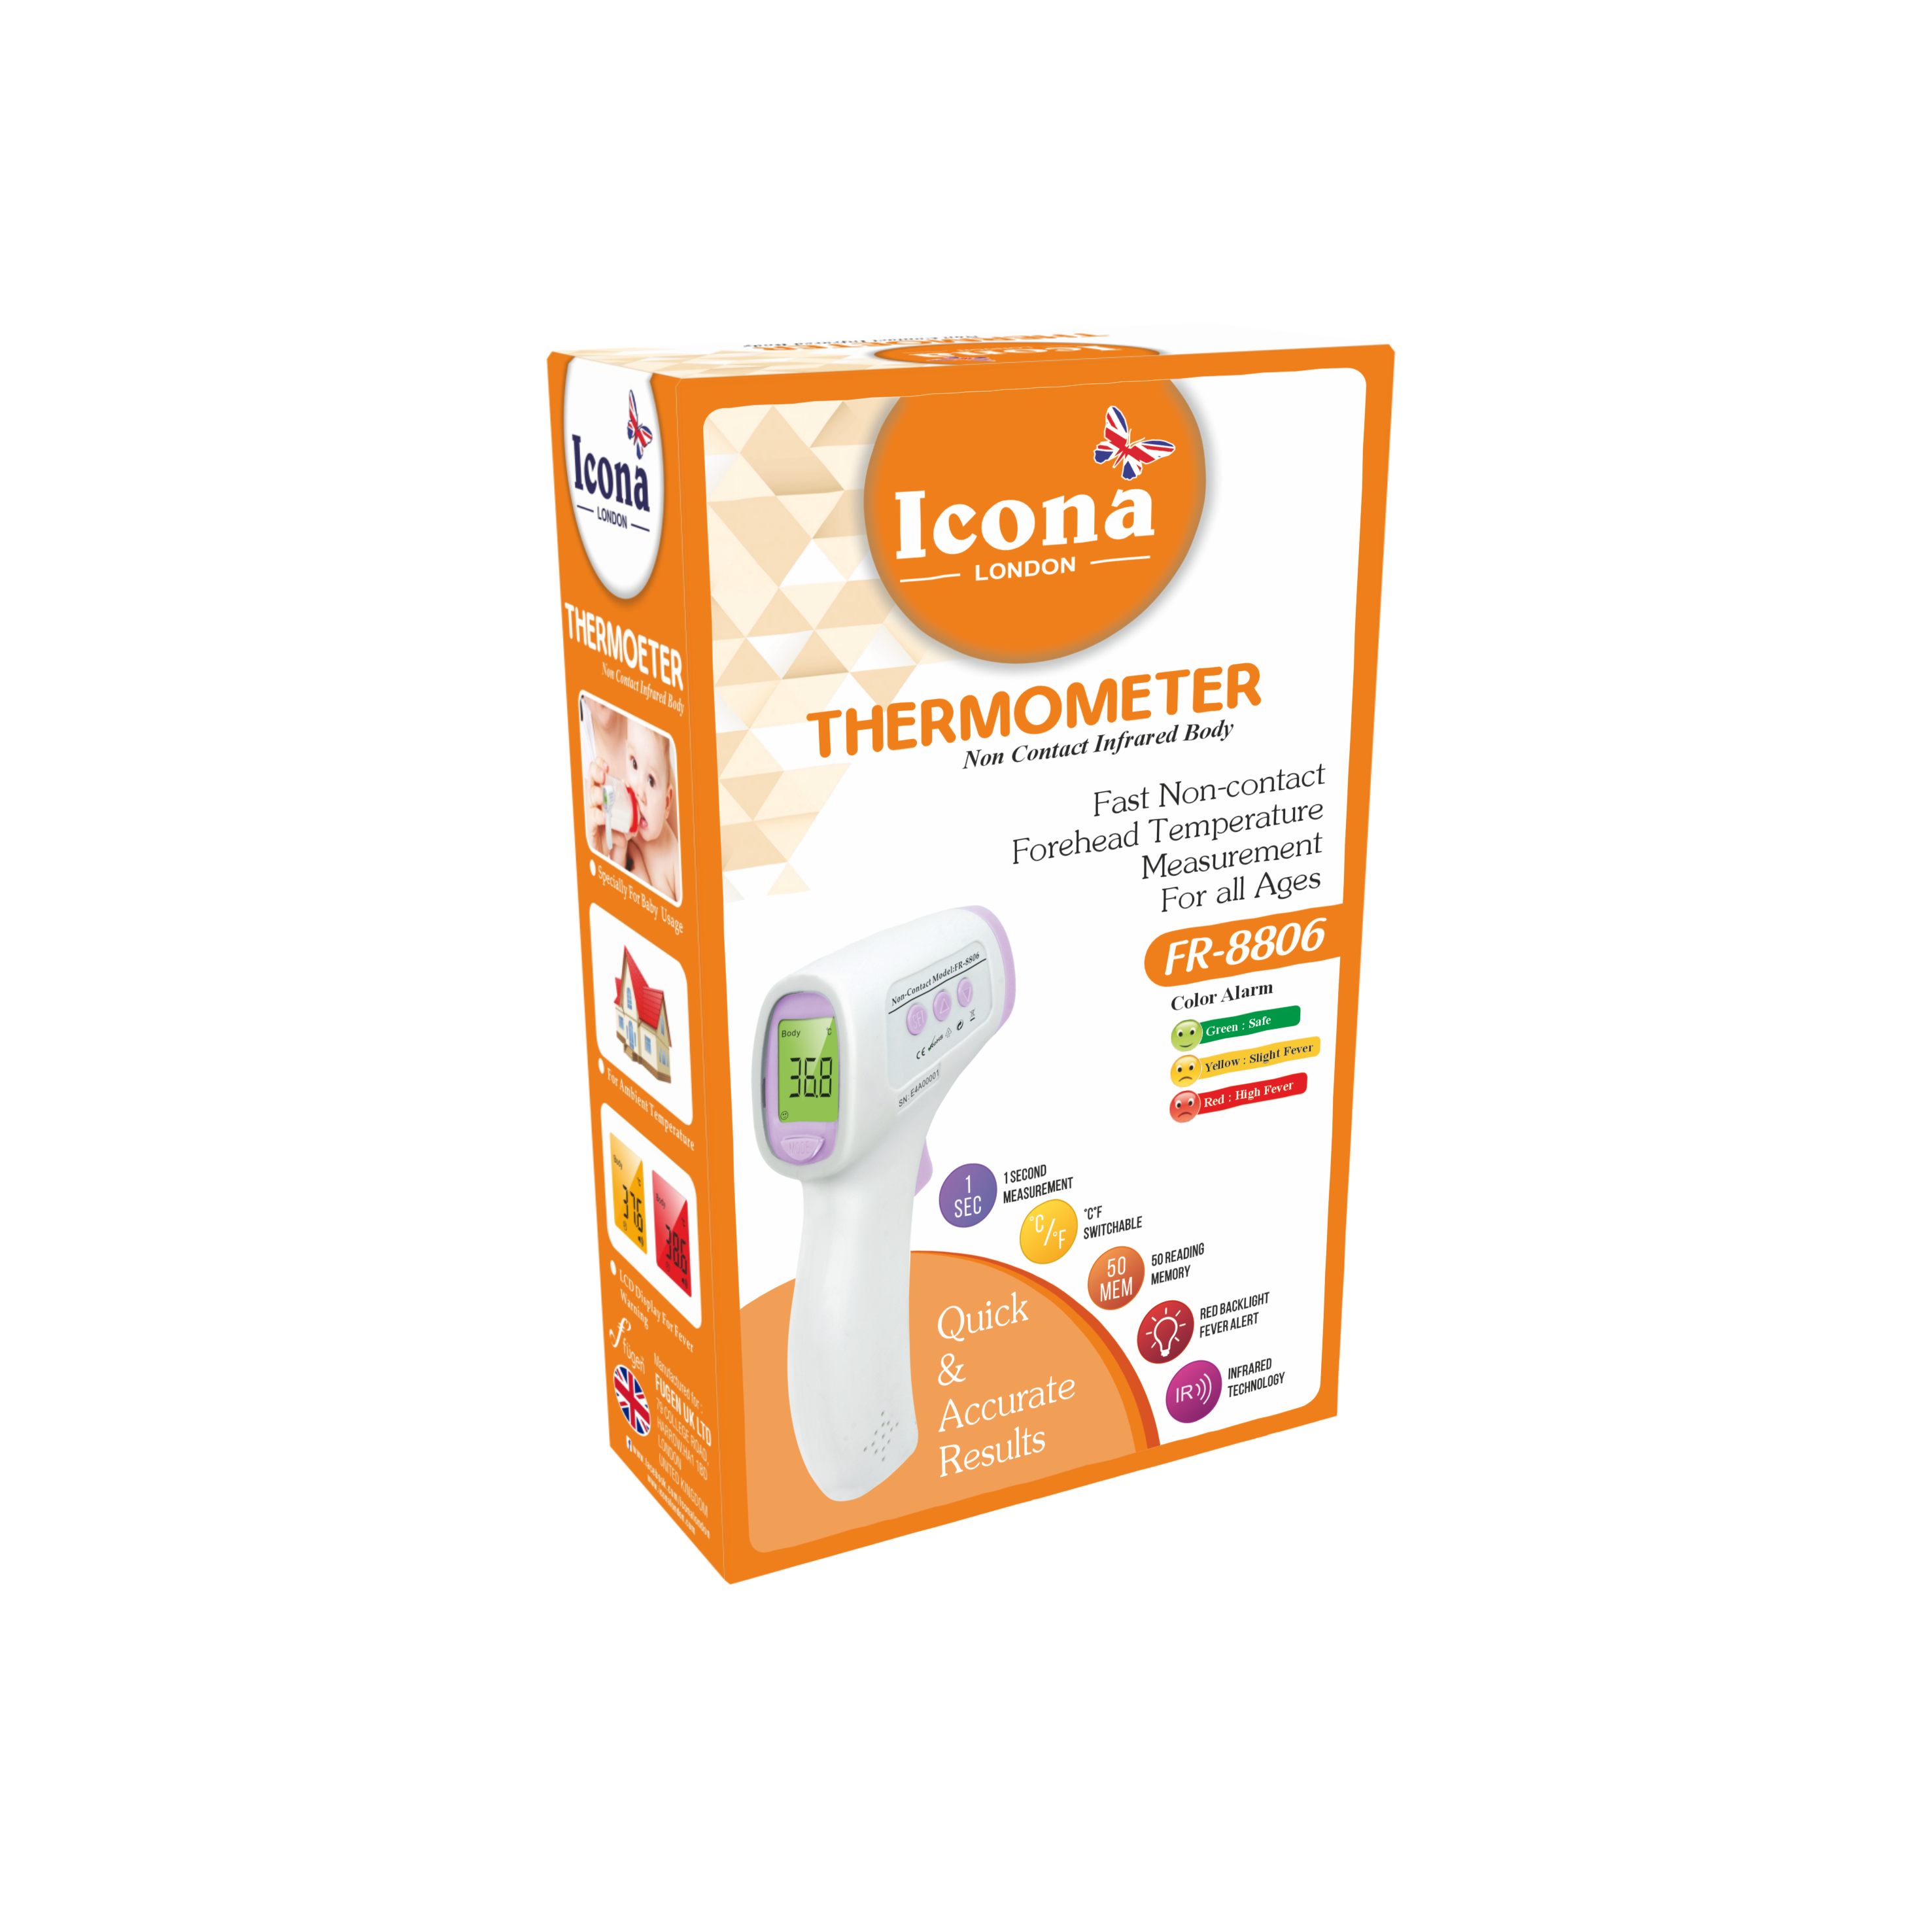 Icona London Thermometer